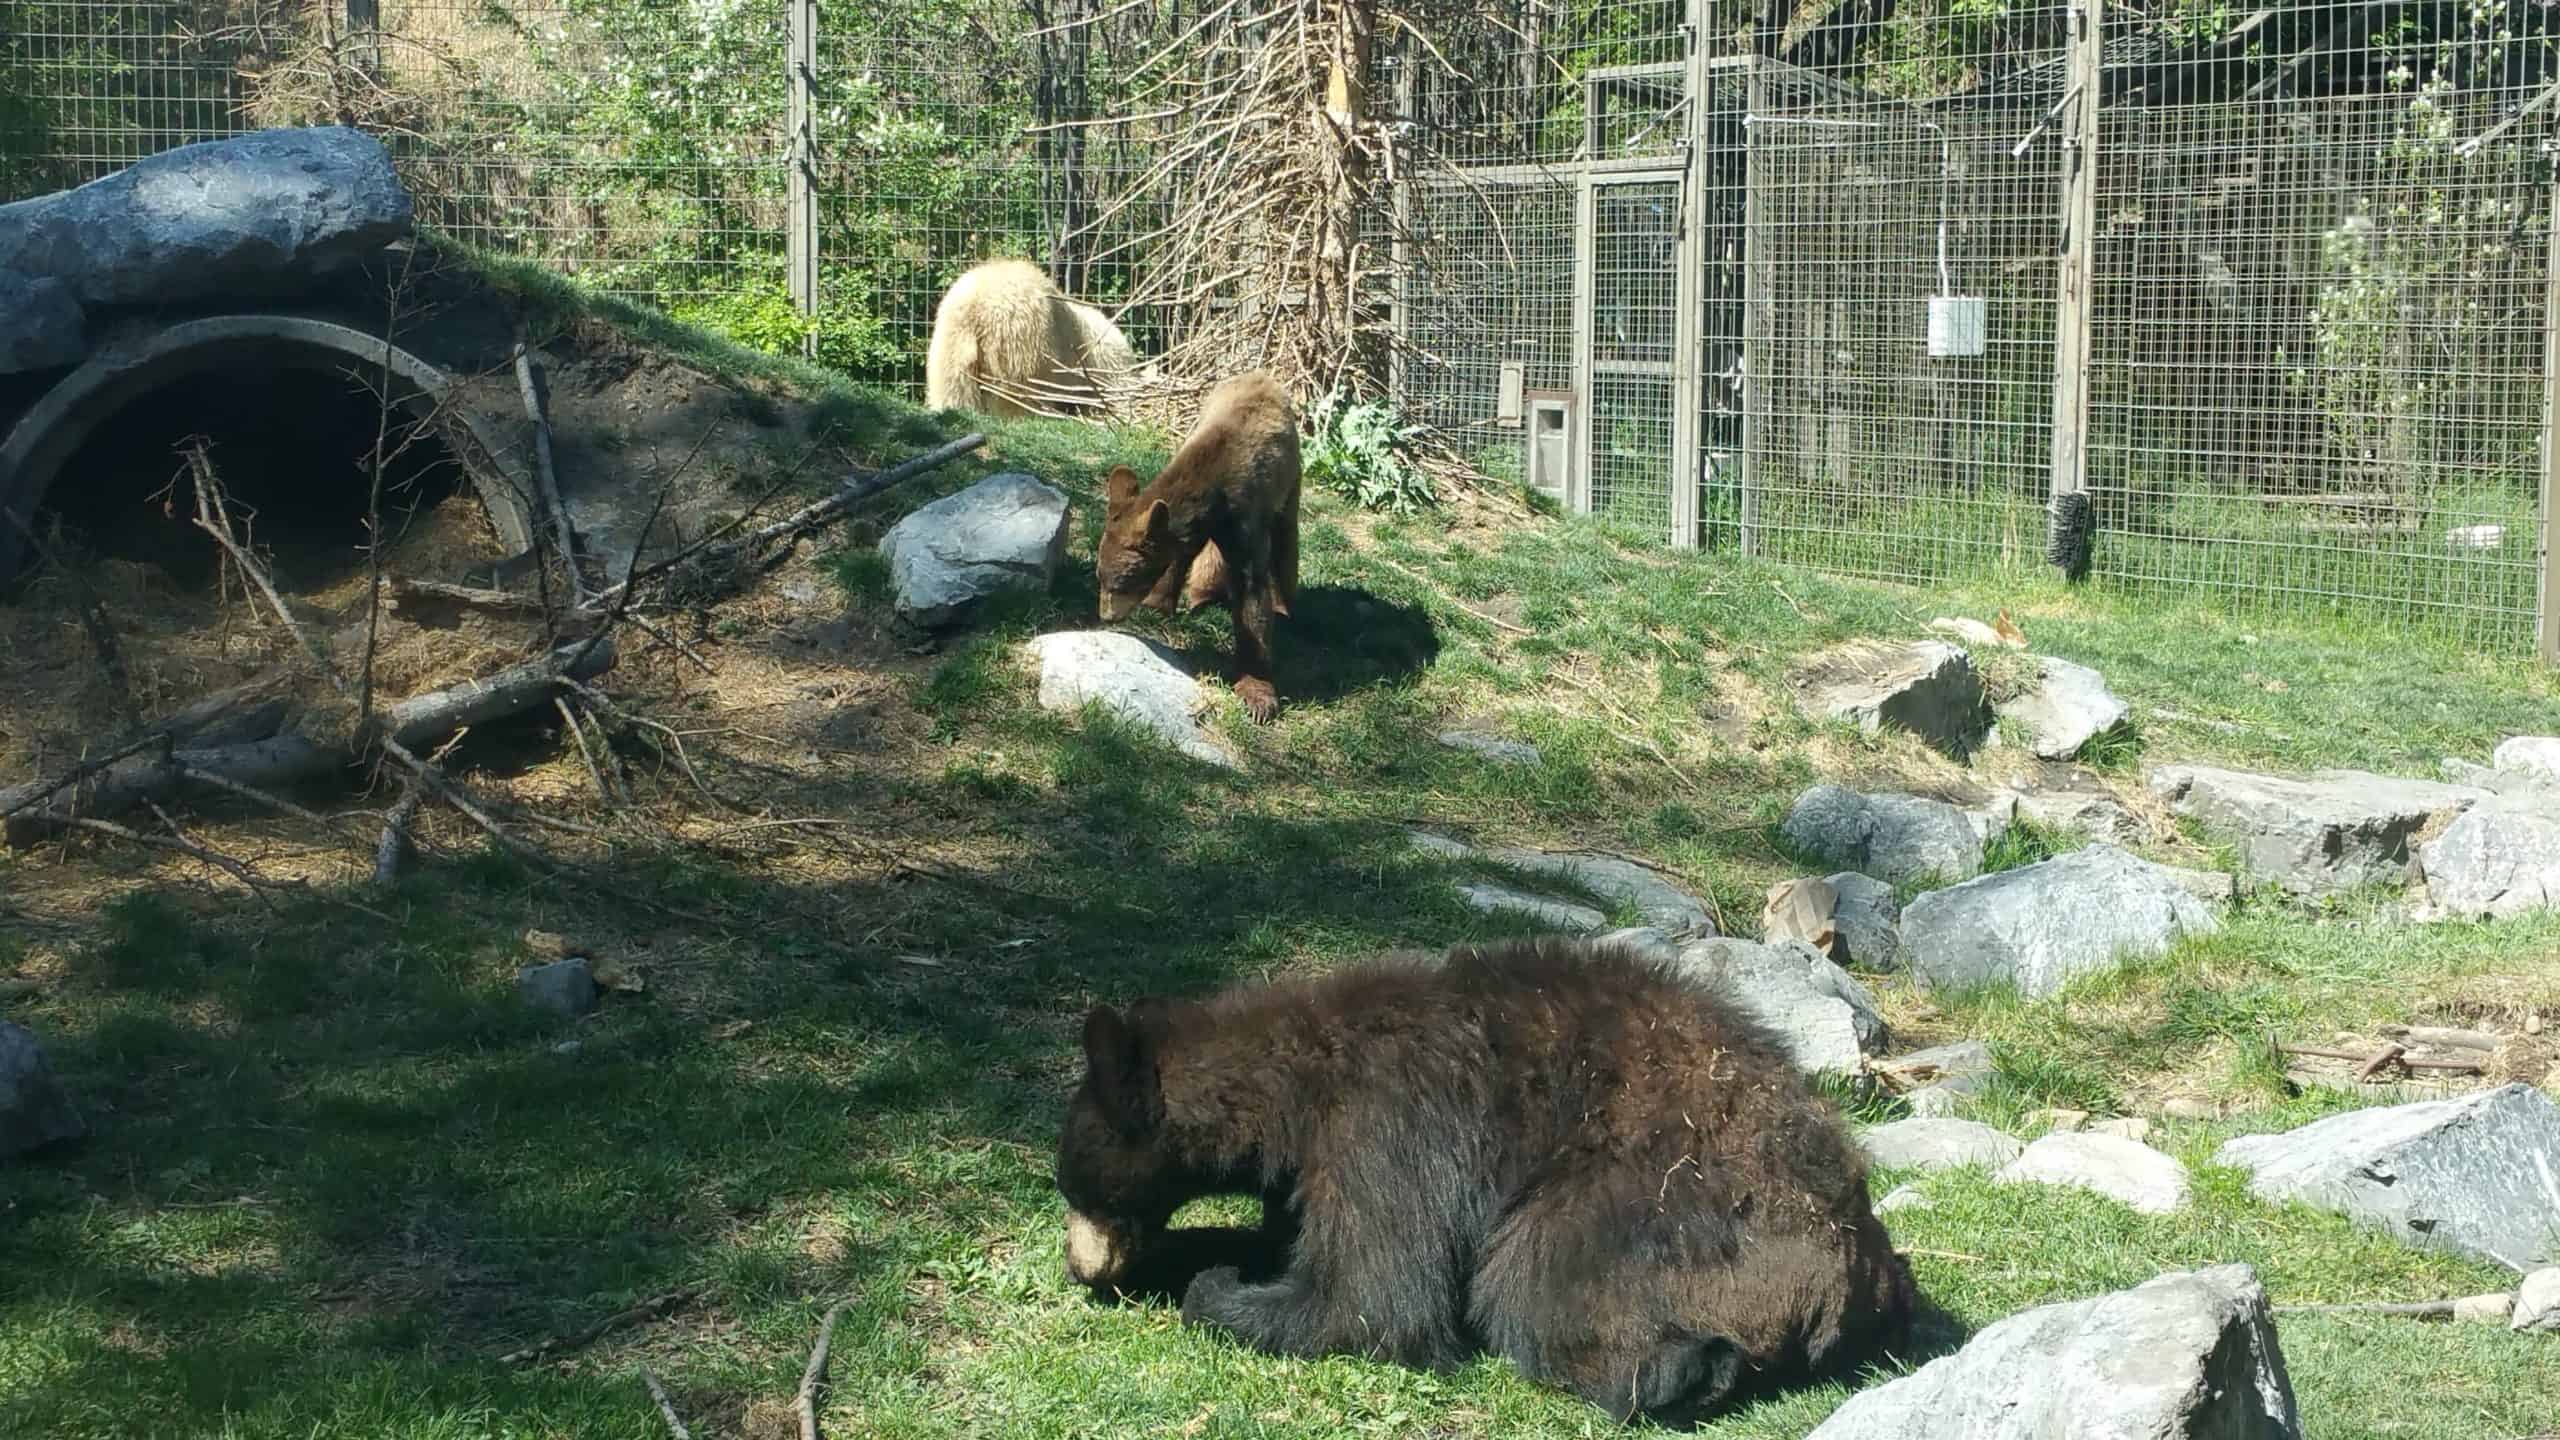 Best-things-to-do-in-Calgary-Canada-Tom-Drake-Calgary-Zoo-bears-scaled.jpg